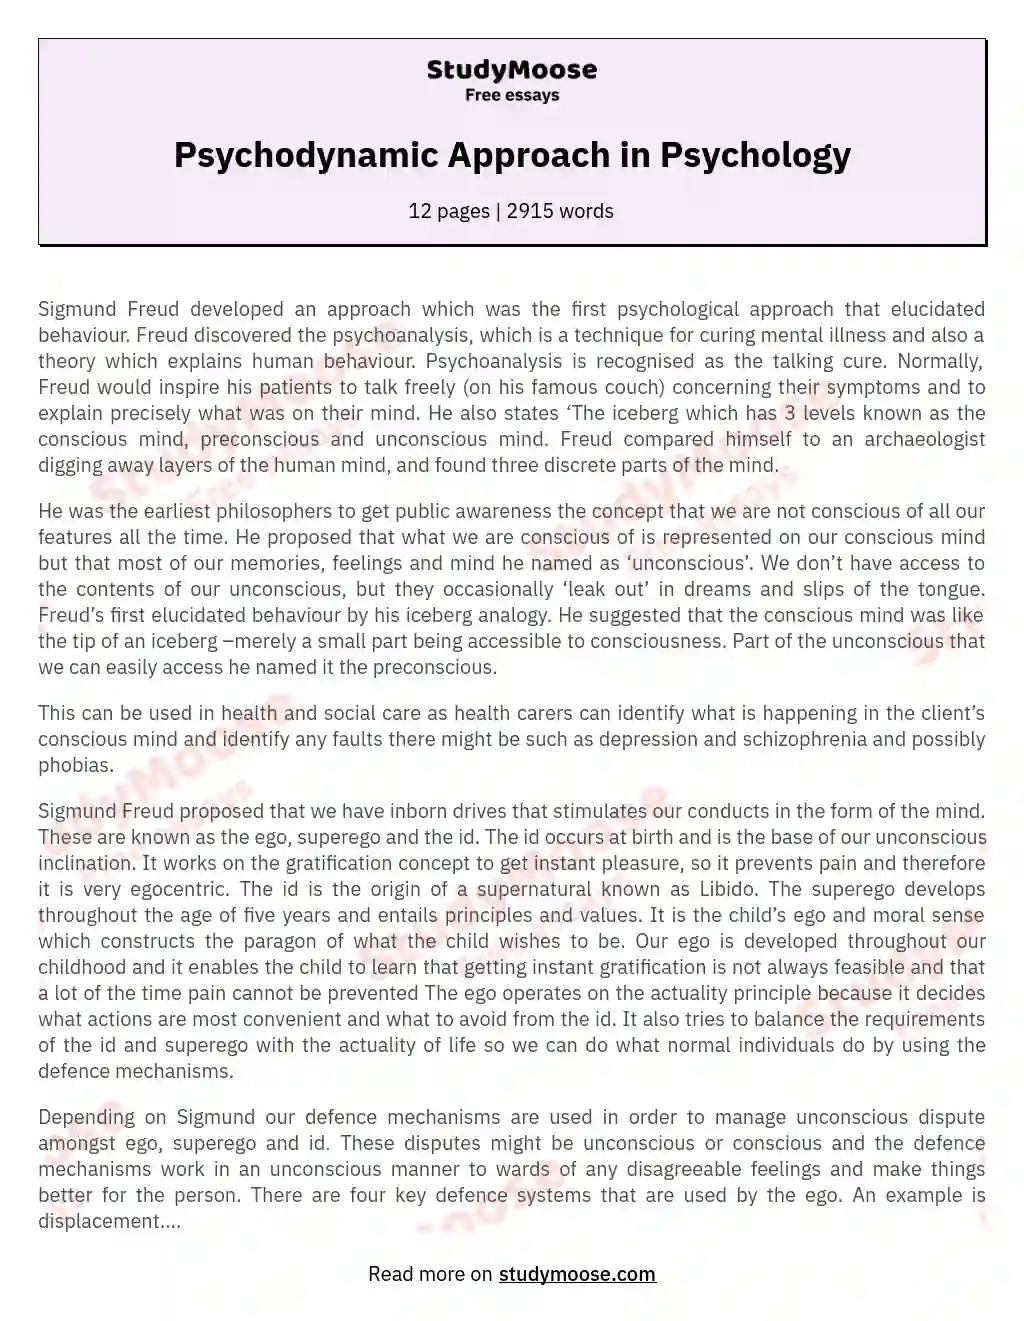 Psychodynamic Approach in Psychology essay